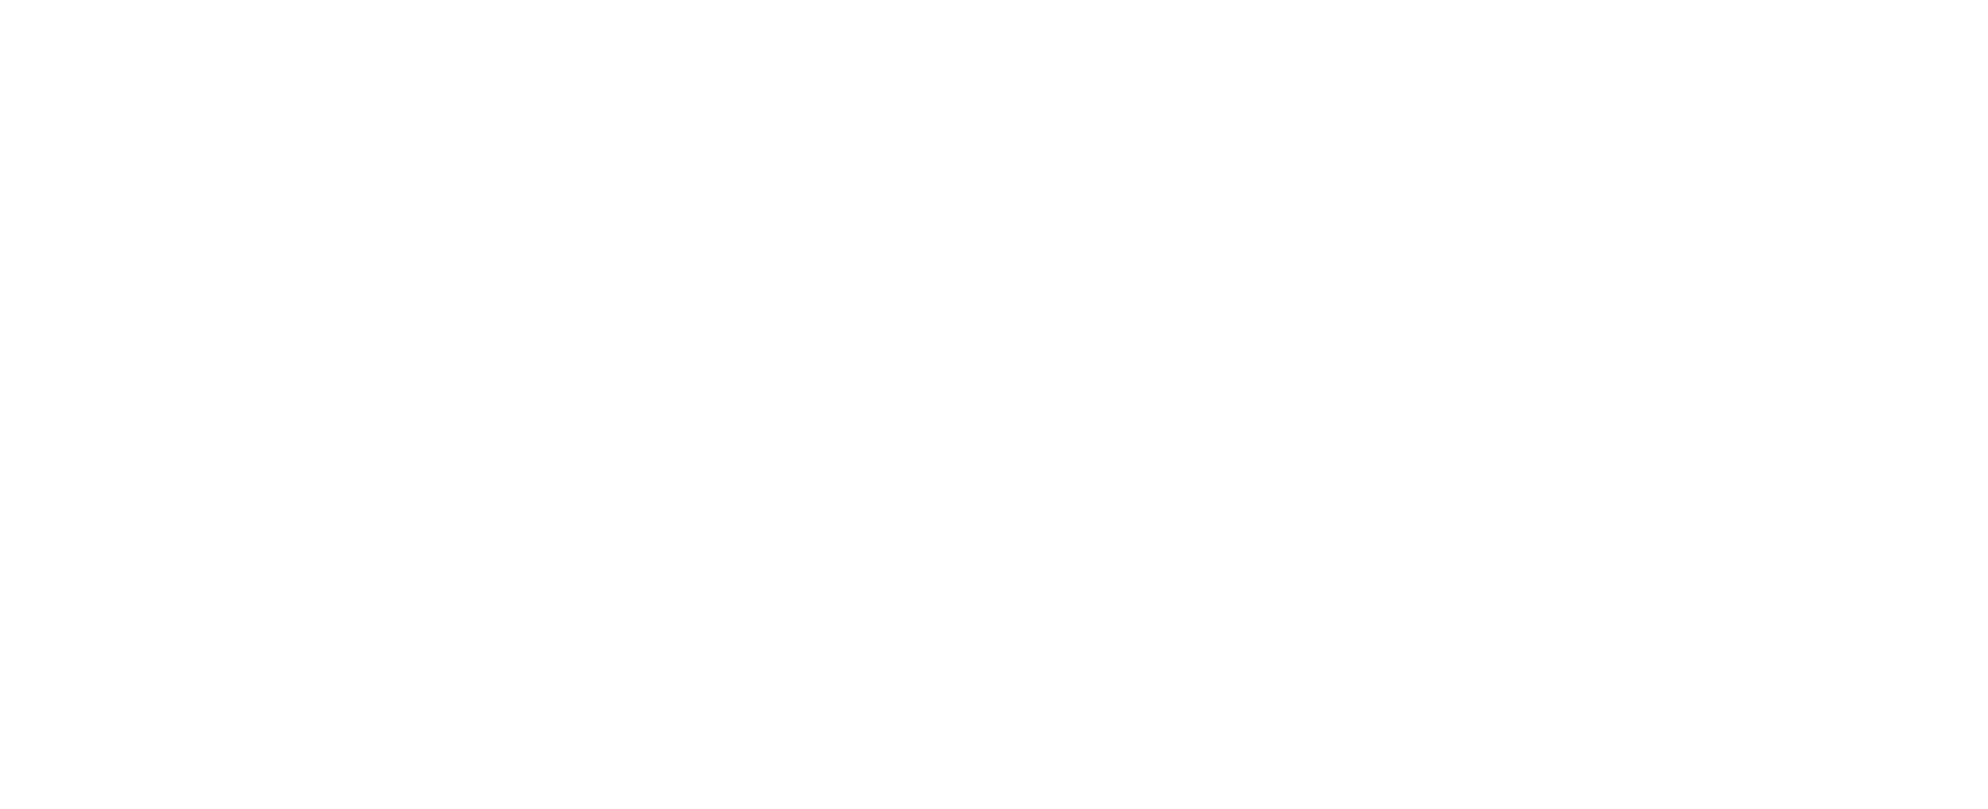 Transit app